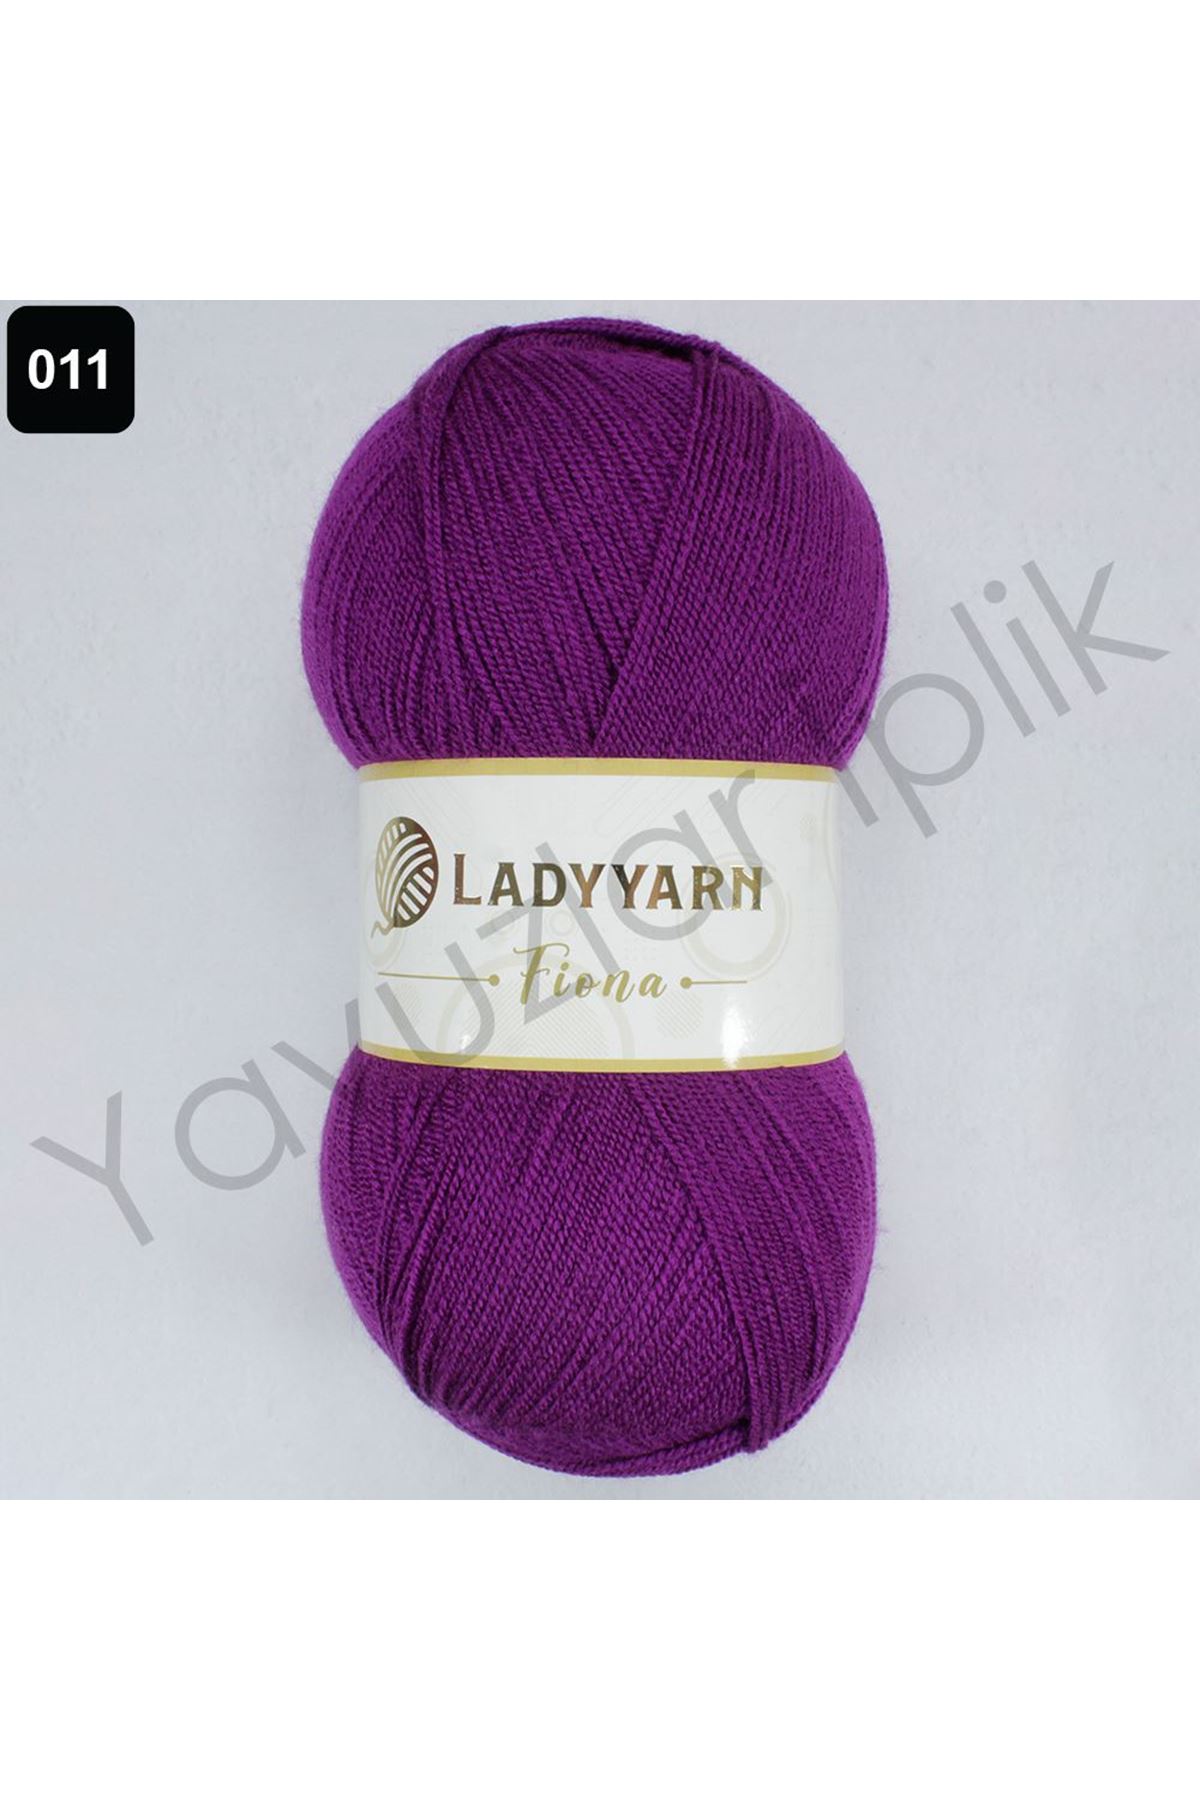 Lady Yarn Fiona Renk No: 011